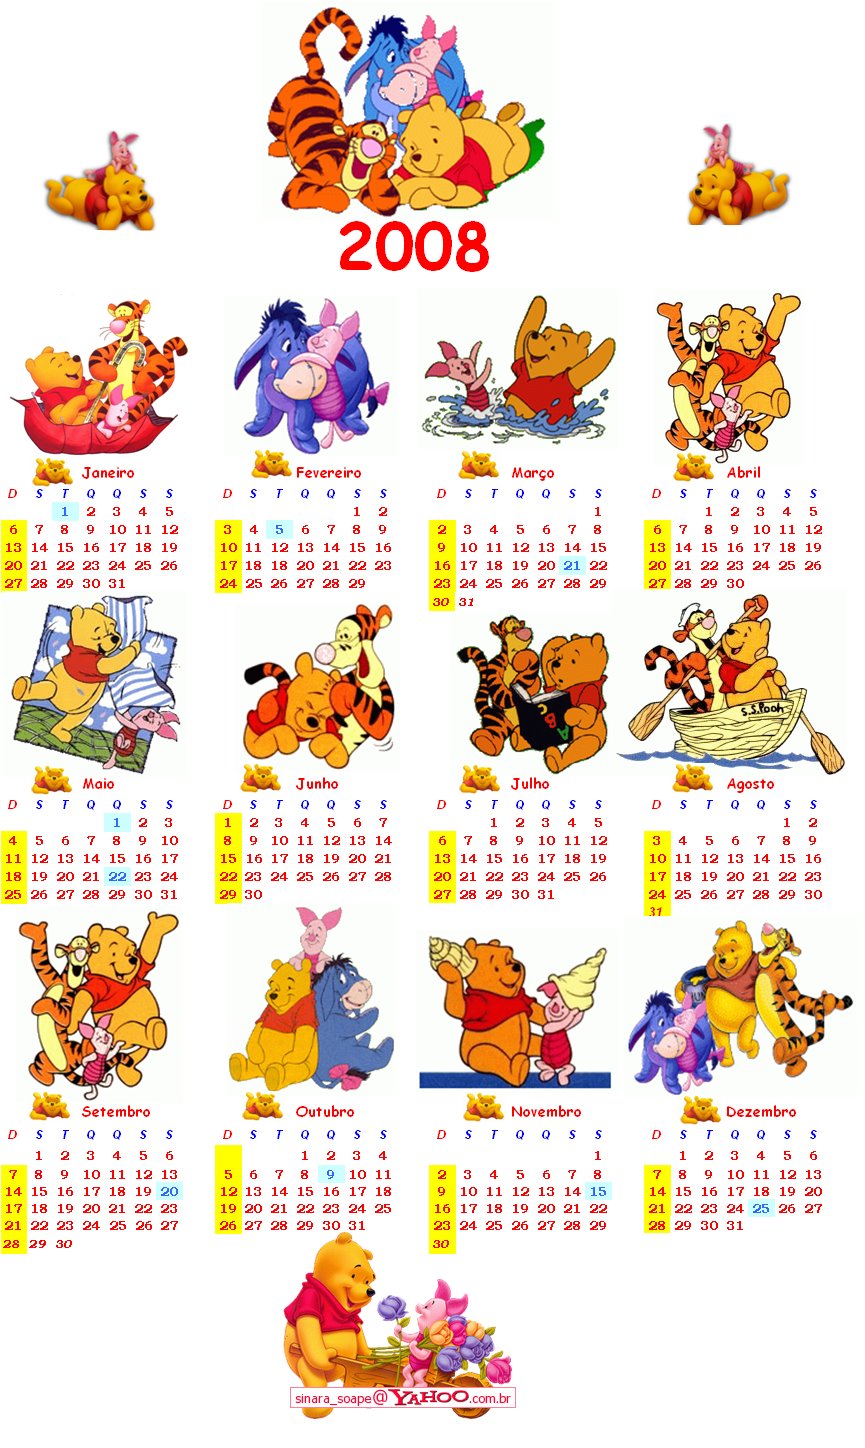 [calendario+pooh.bmp]